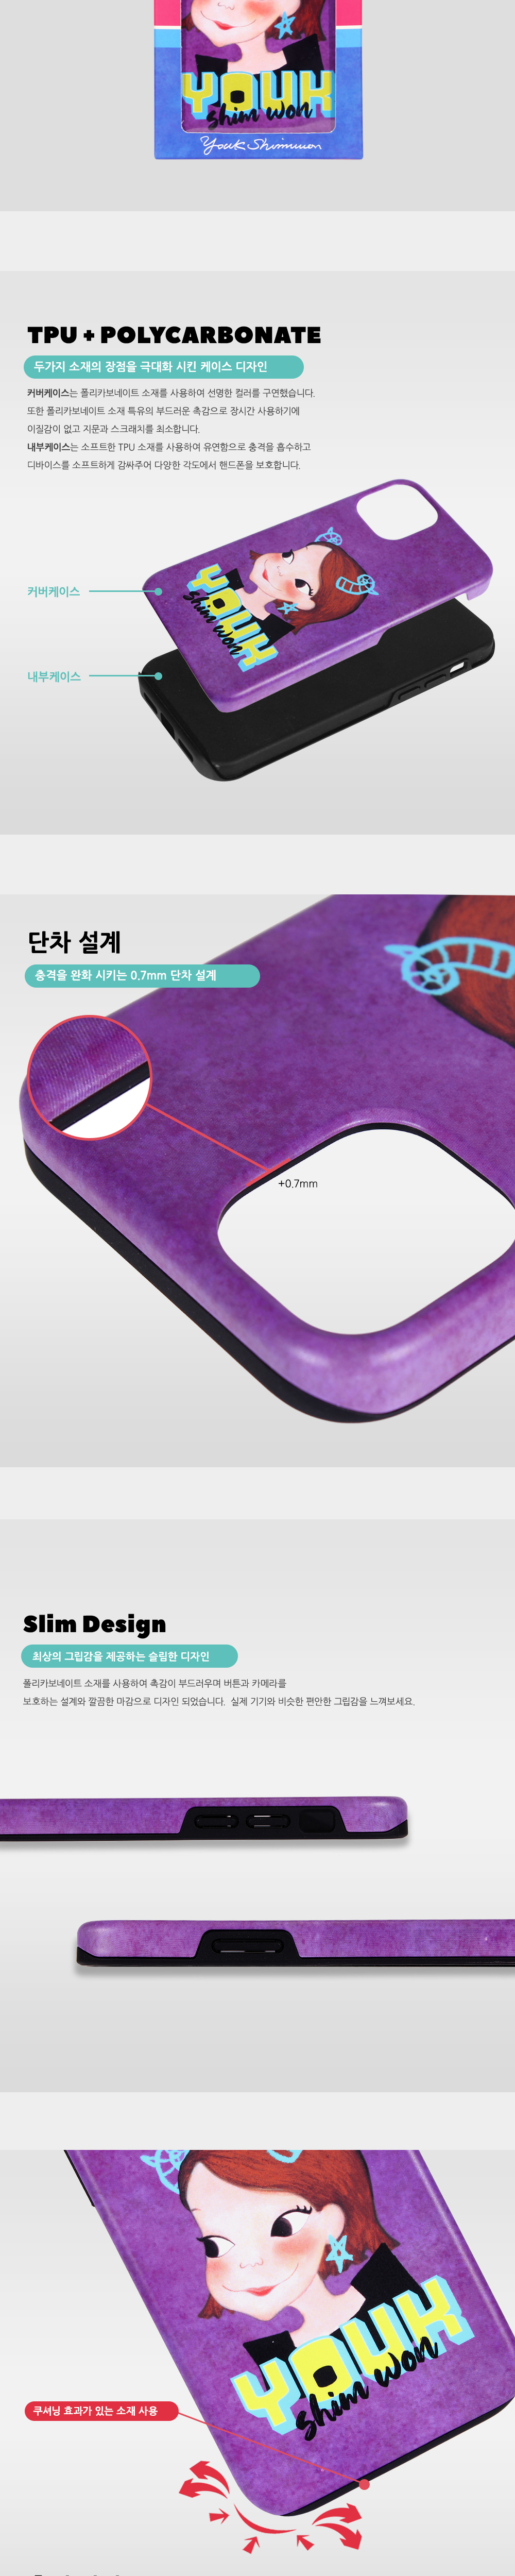 accessories purple color image-S1L1